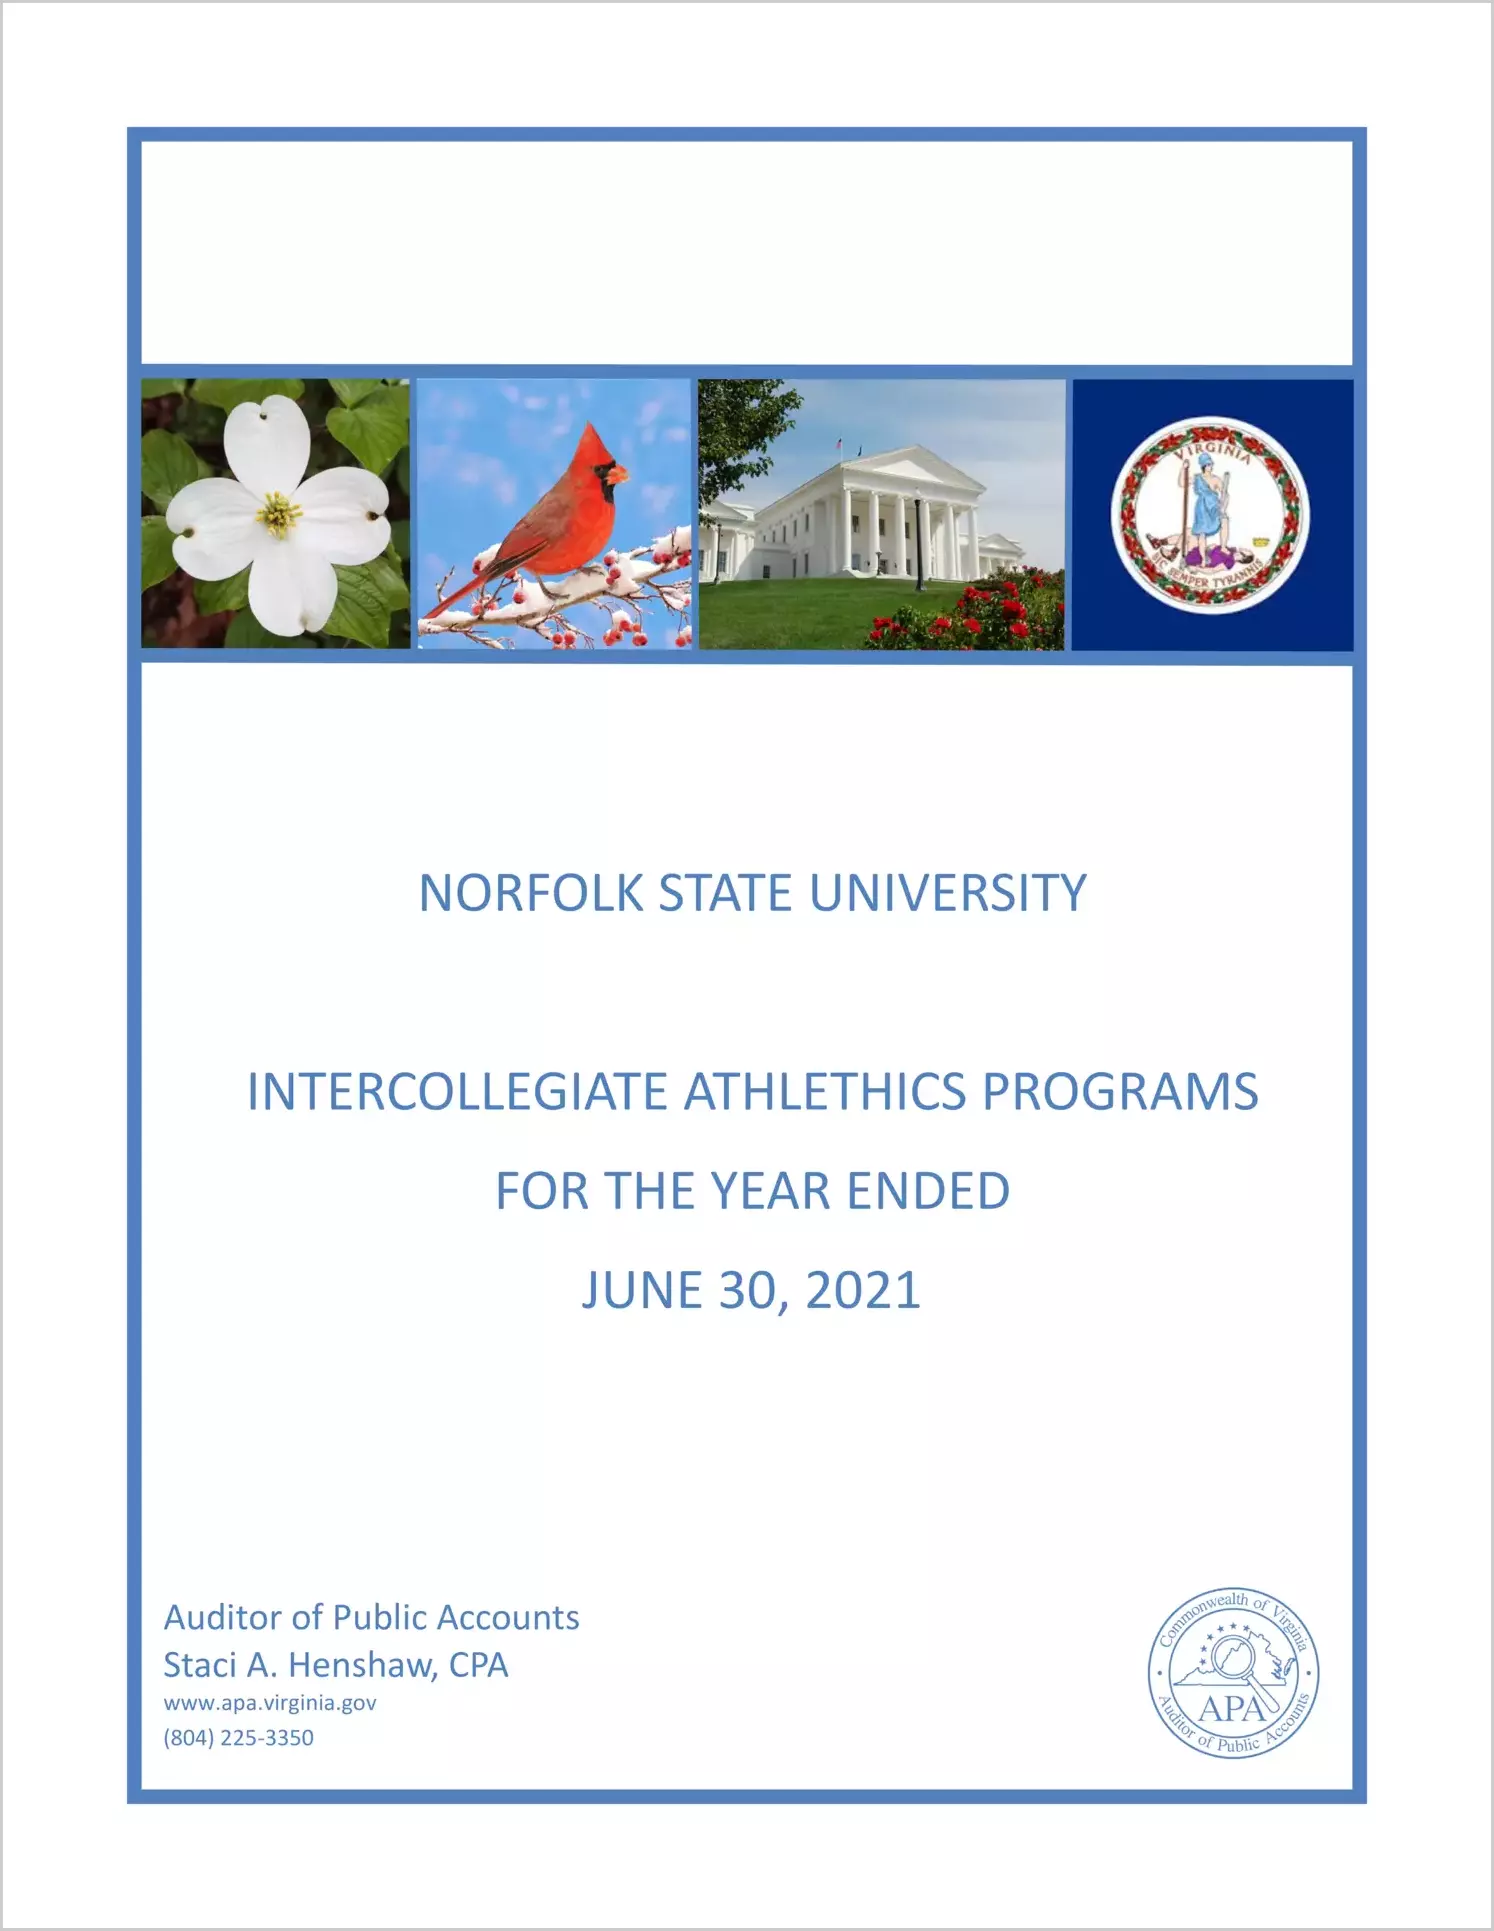 Norfolk State University Intercollegiate Athletics Programs for the year ended June 30, 2021